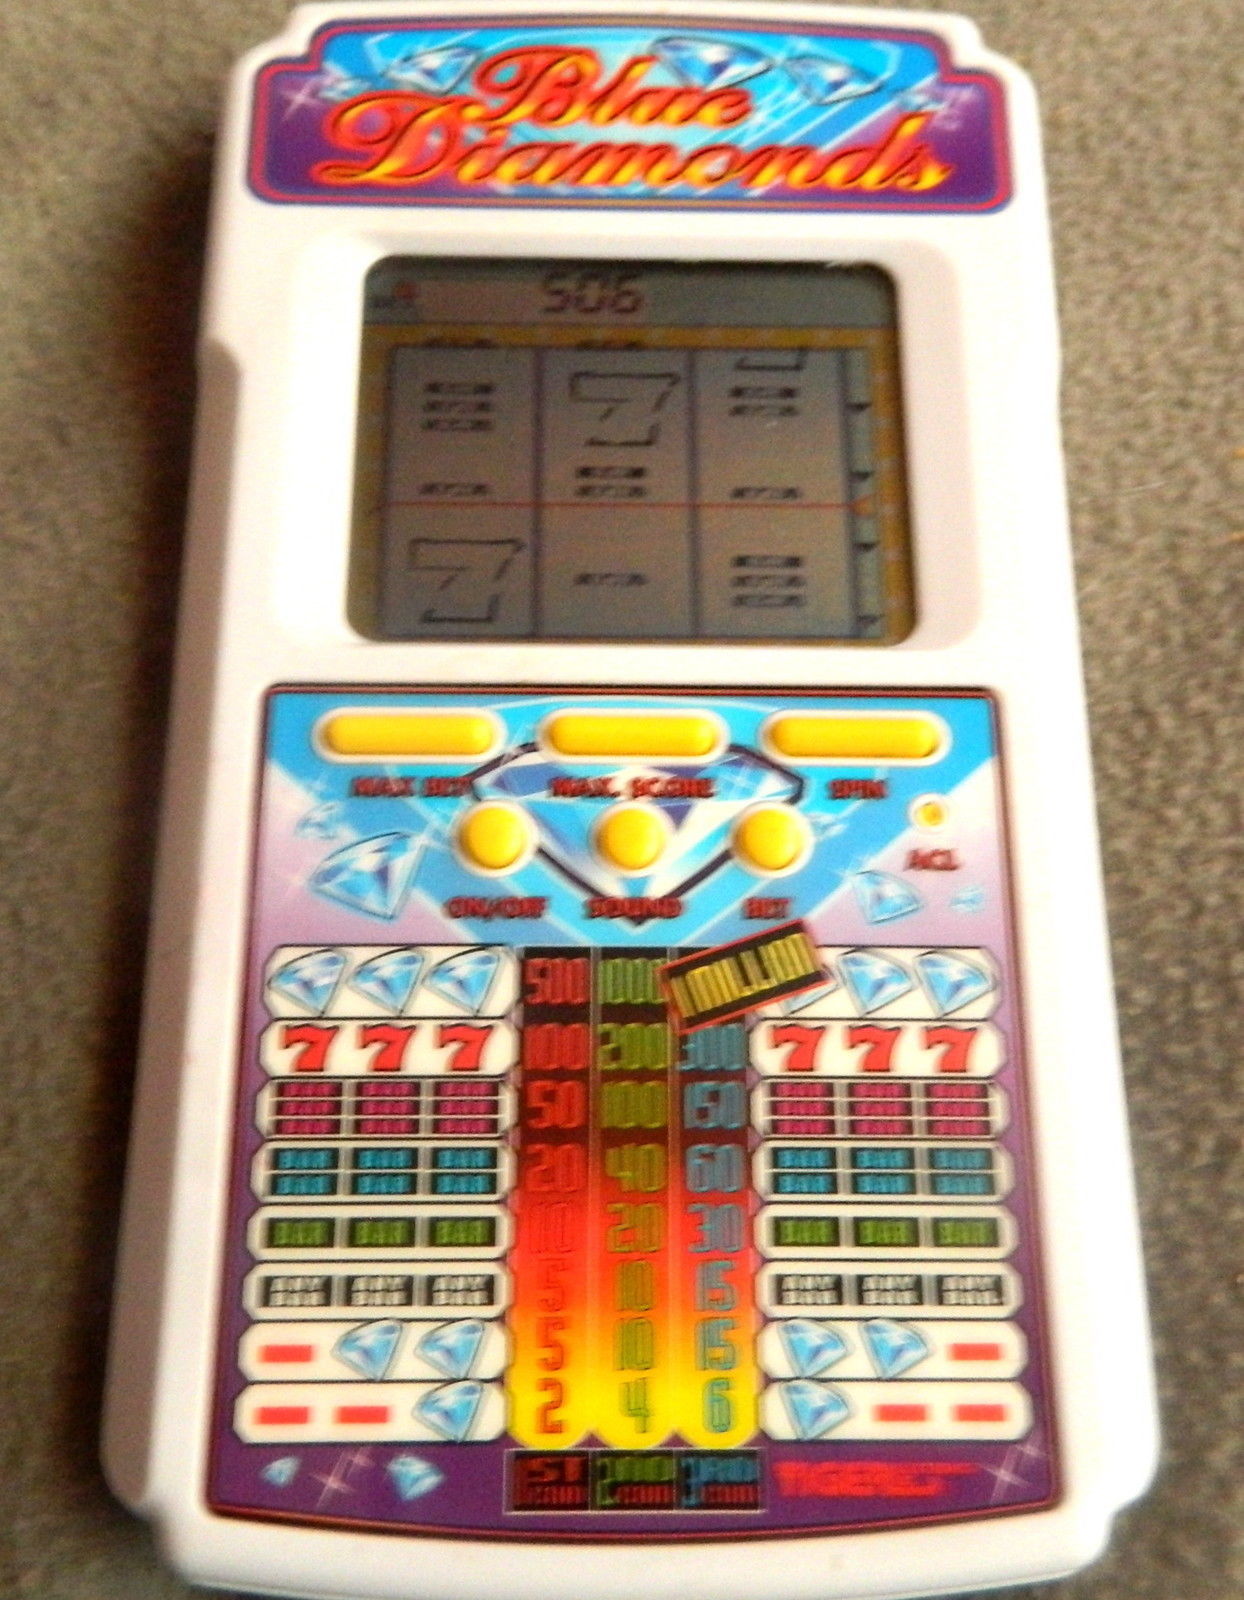 Electronic Handheld Video Game Blue Diamonds Tiger 1995 Vtg Casino Slot Machine for sale online